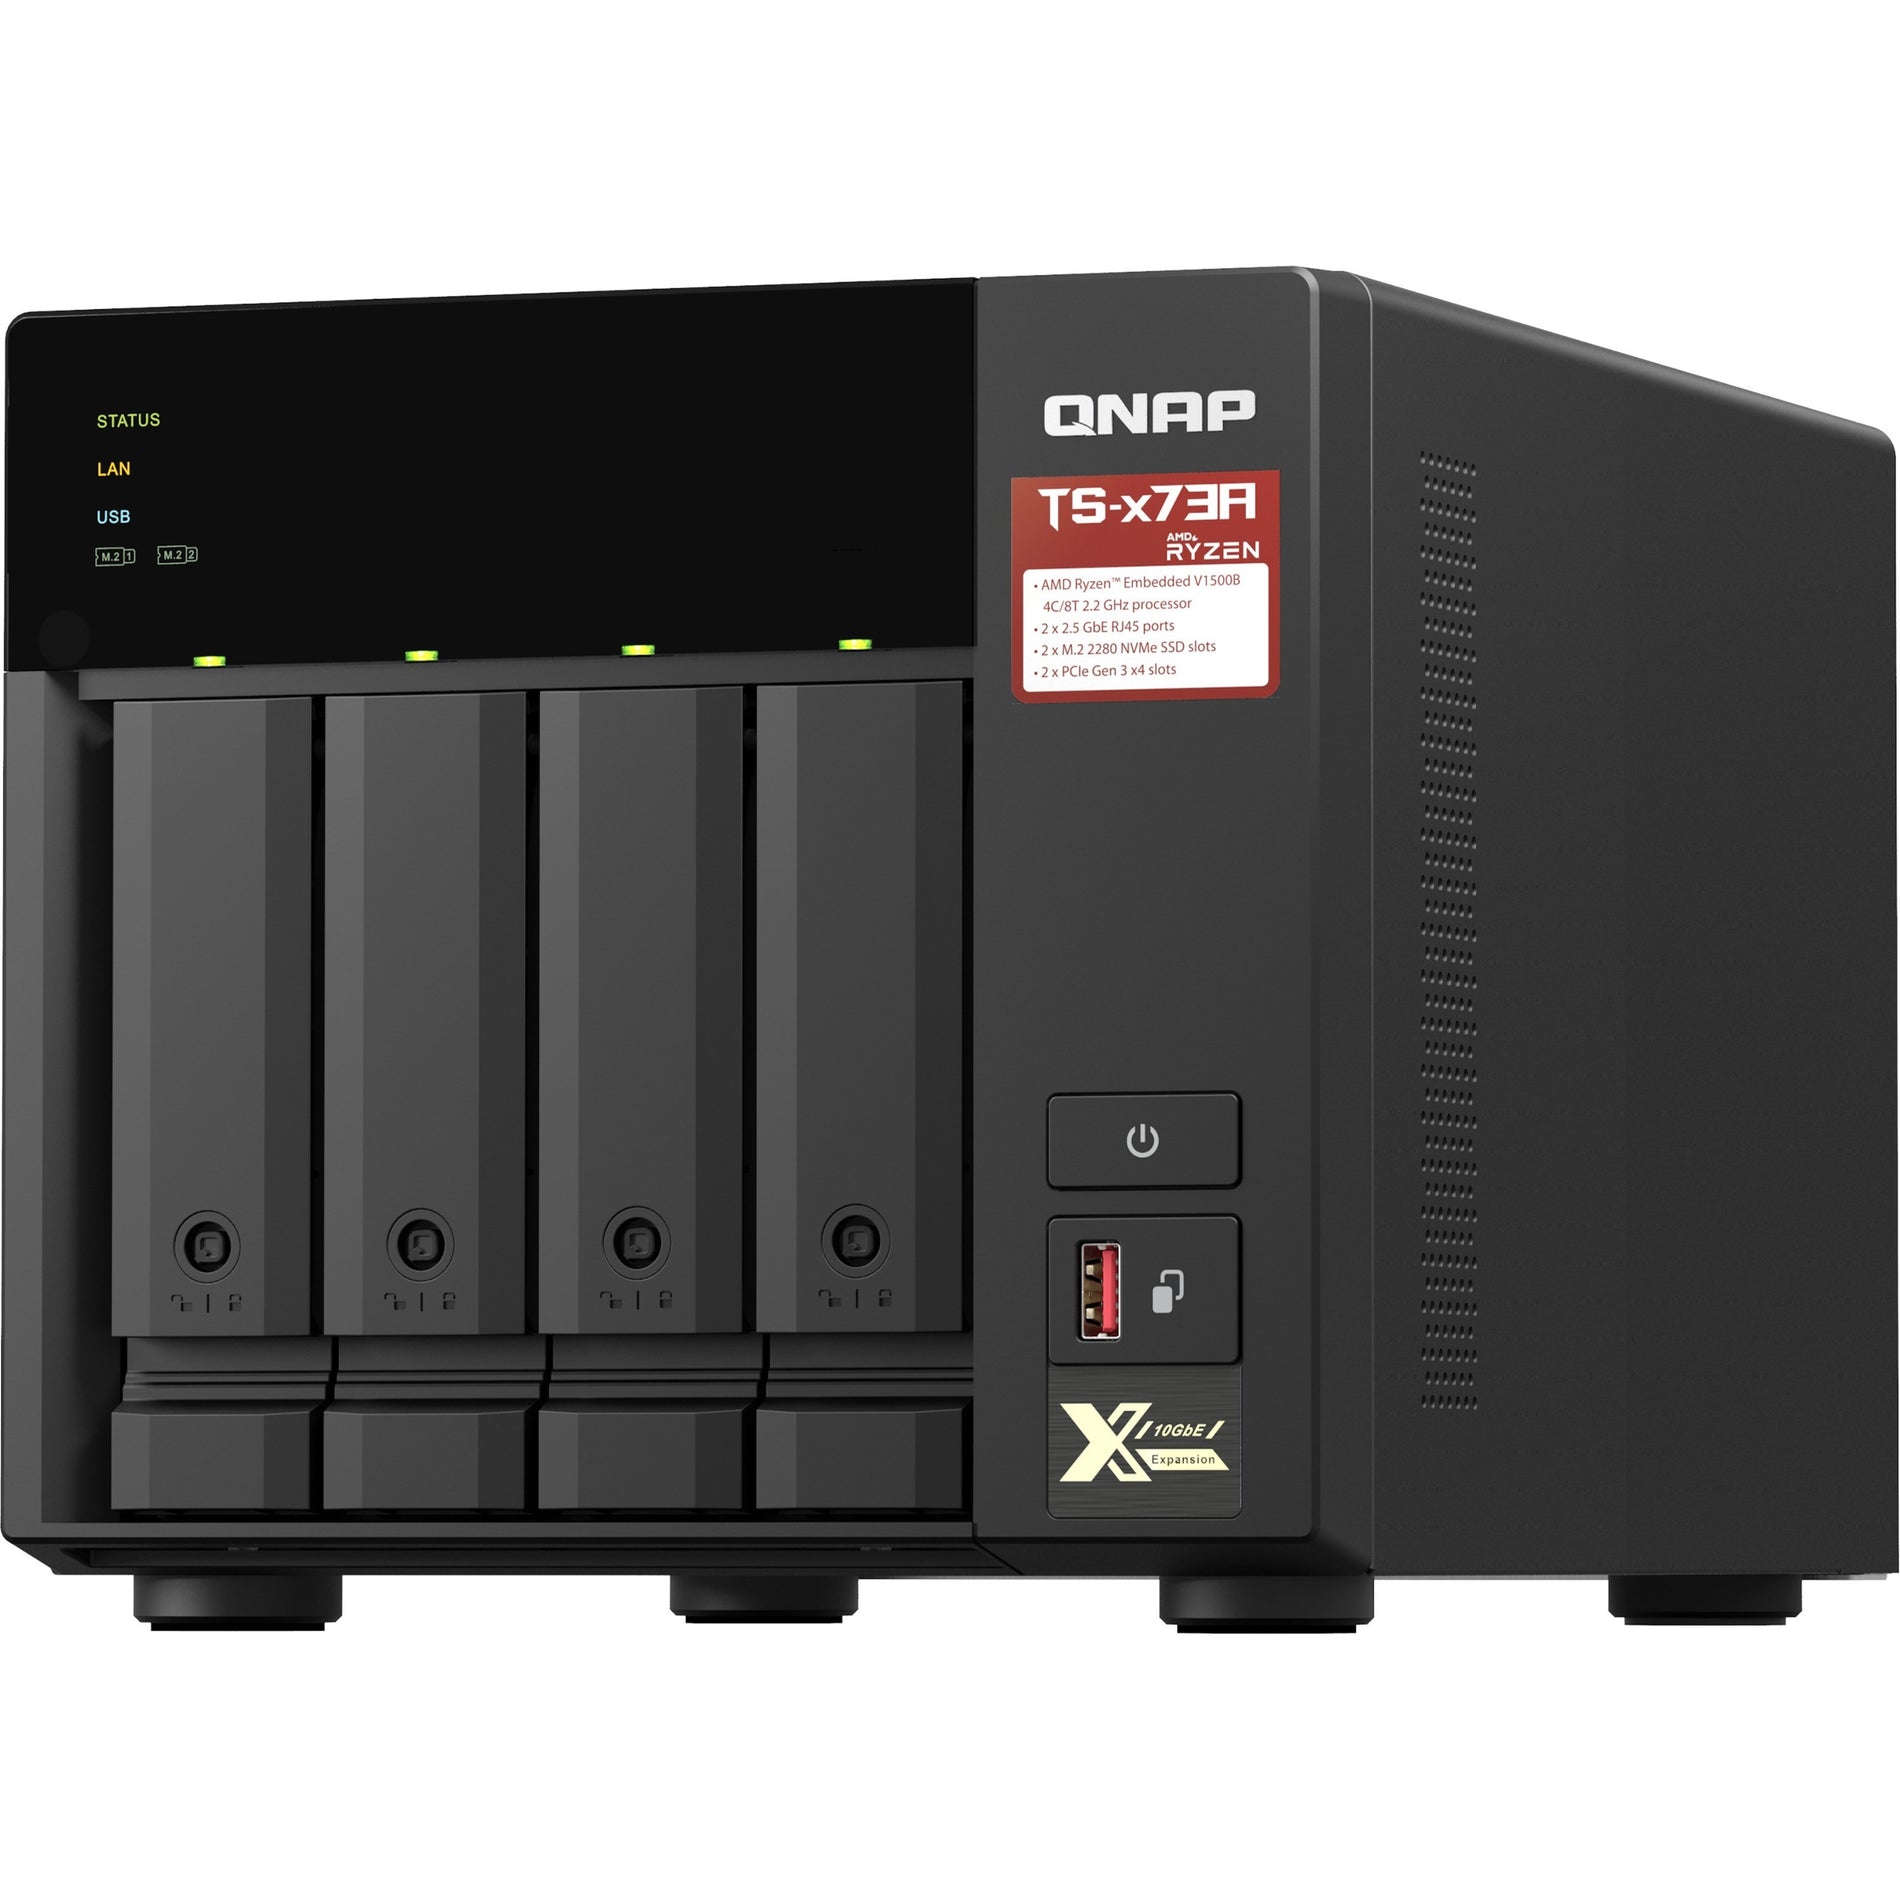 QNAP TS-473A-8G-US TS-x73A SAN/NAS Storage System, Quad-core Ryzen V1500B, 8GB DDR4, 4-Bay, 2.5GbE Ethernet, QTS 4.5.1